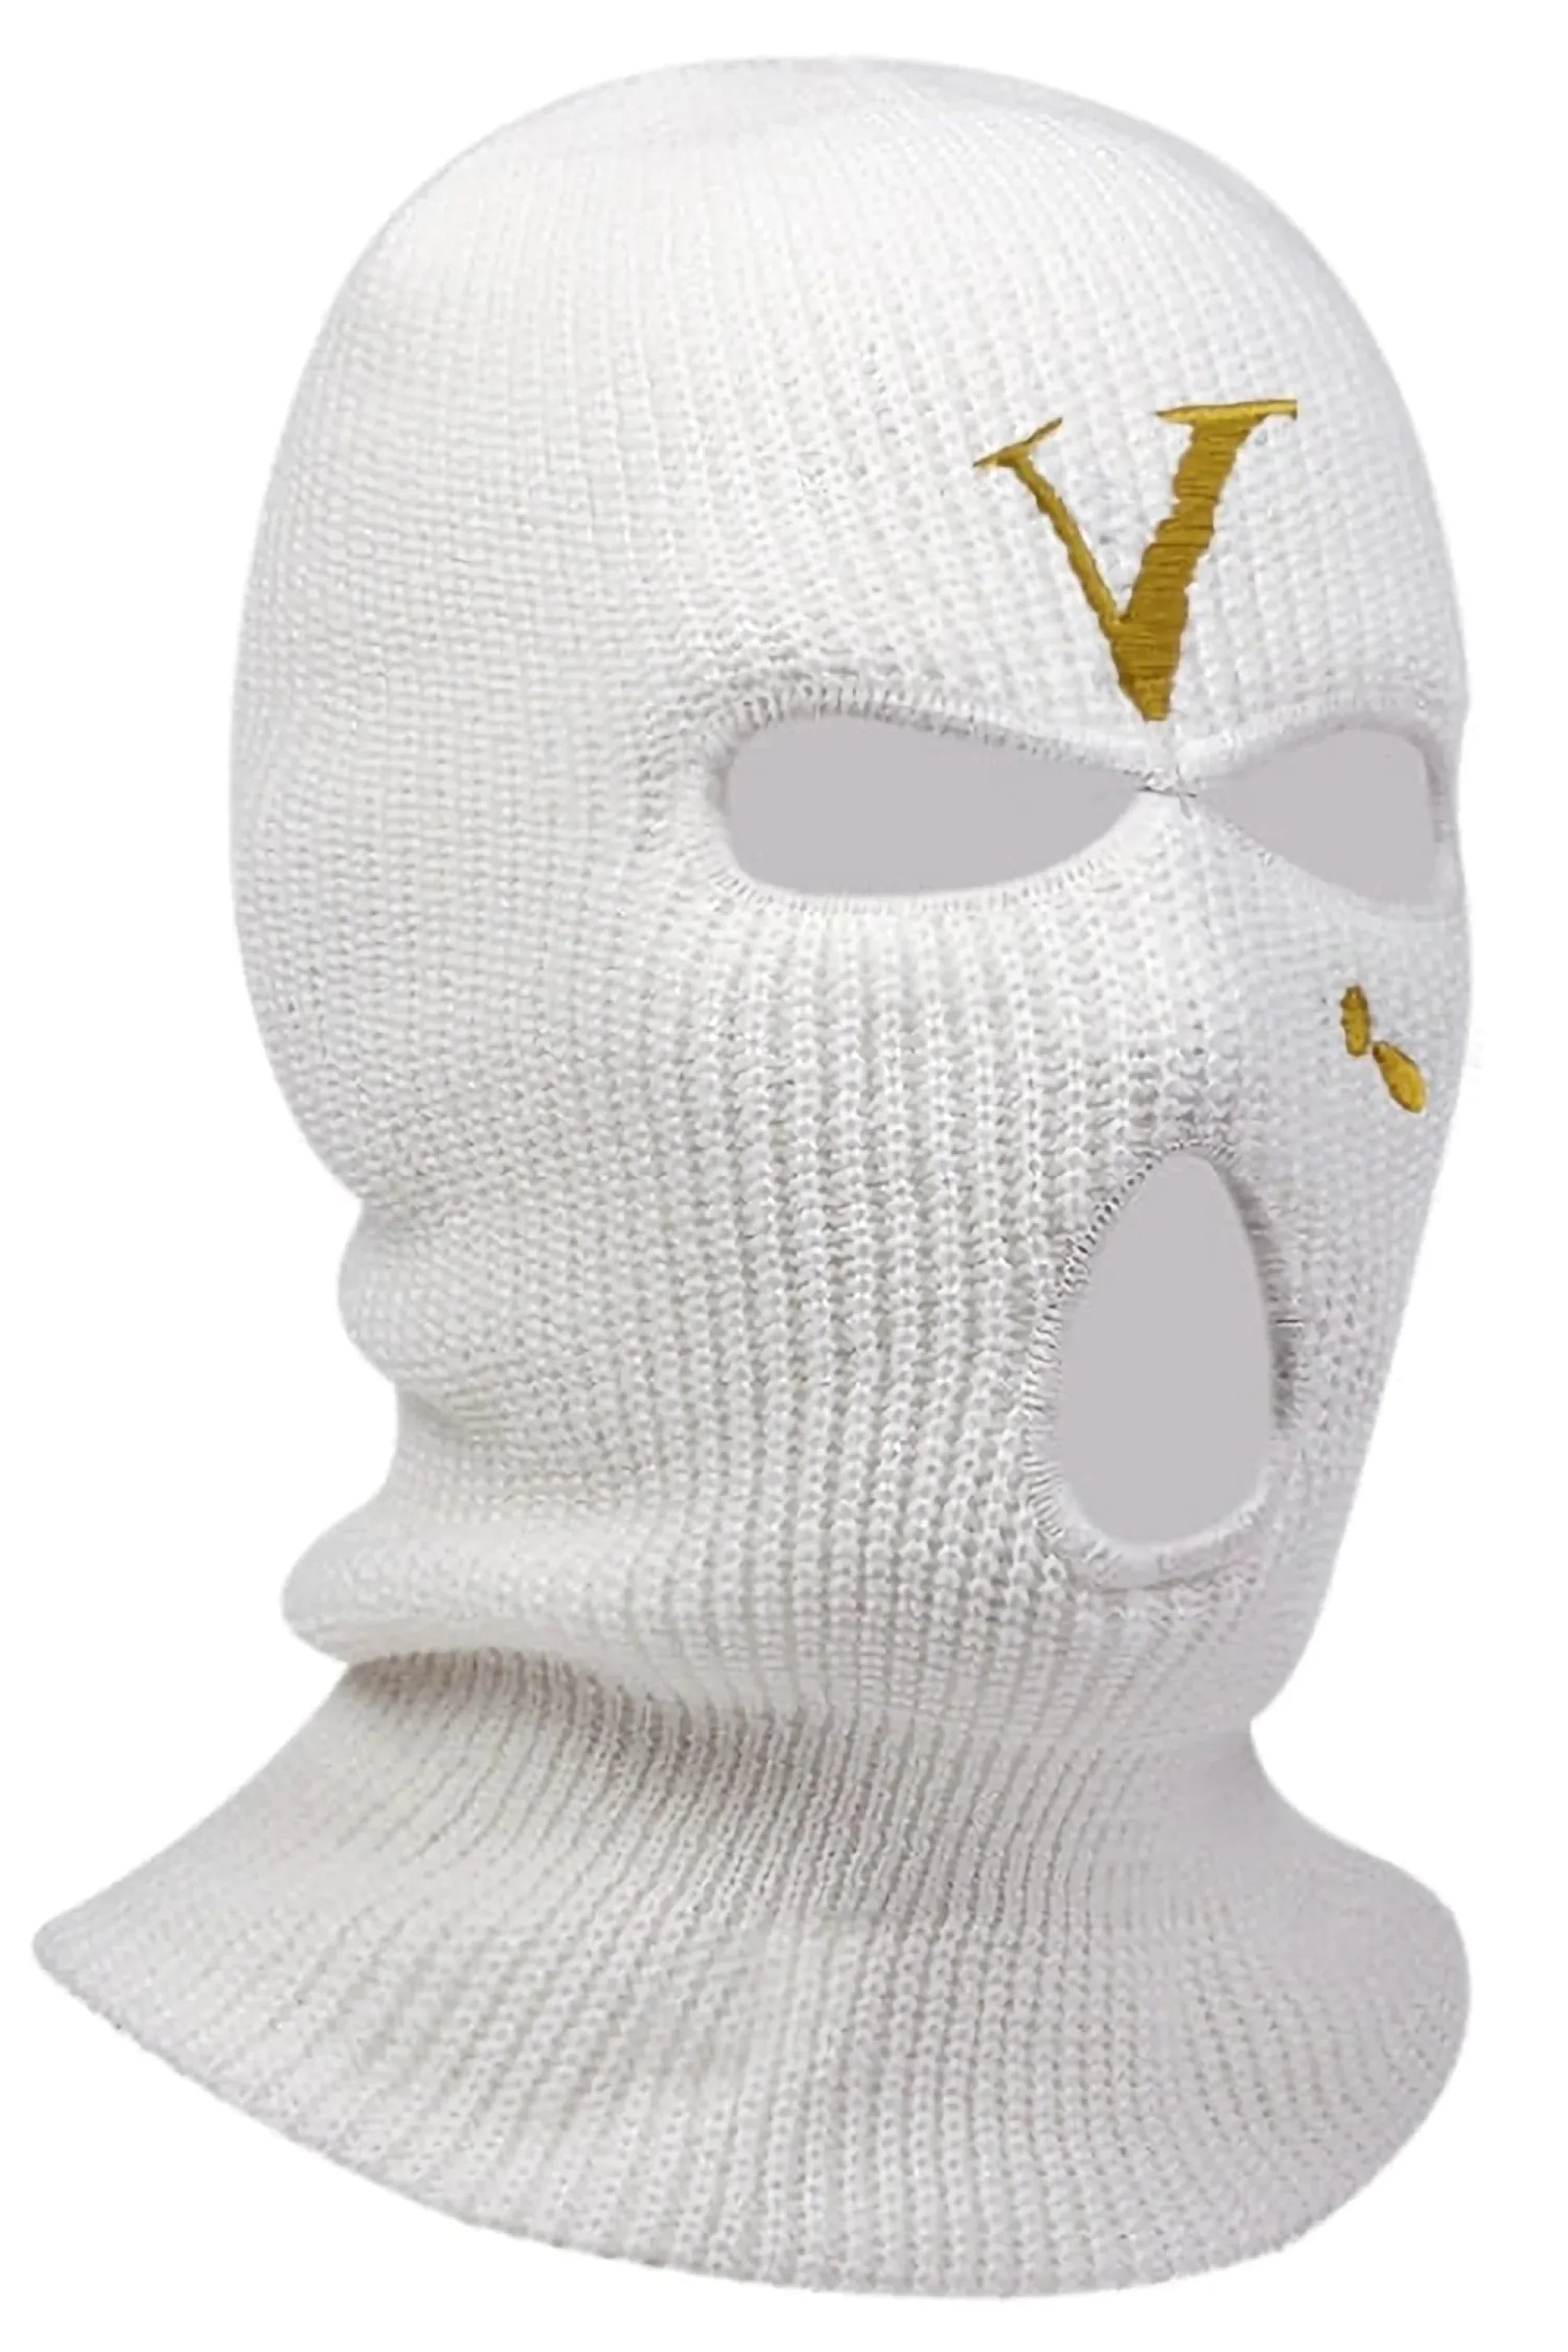 White Vlone Embroidery 3 Holes Ski Mask - White